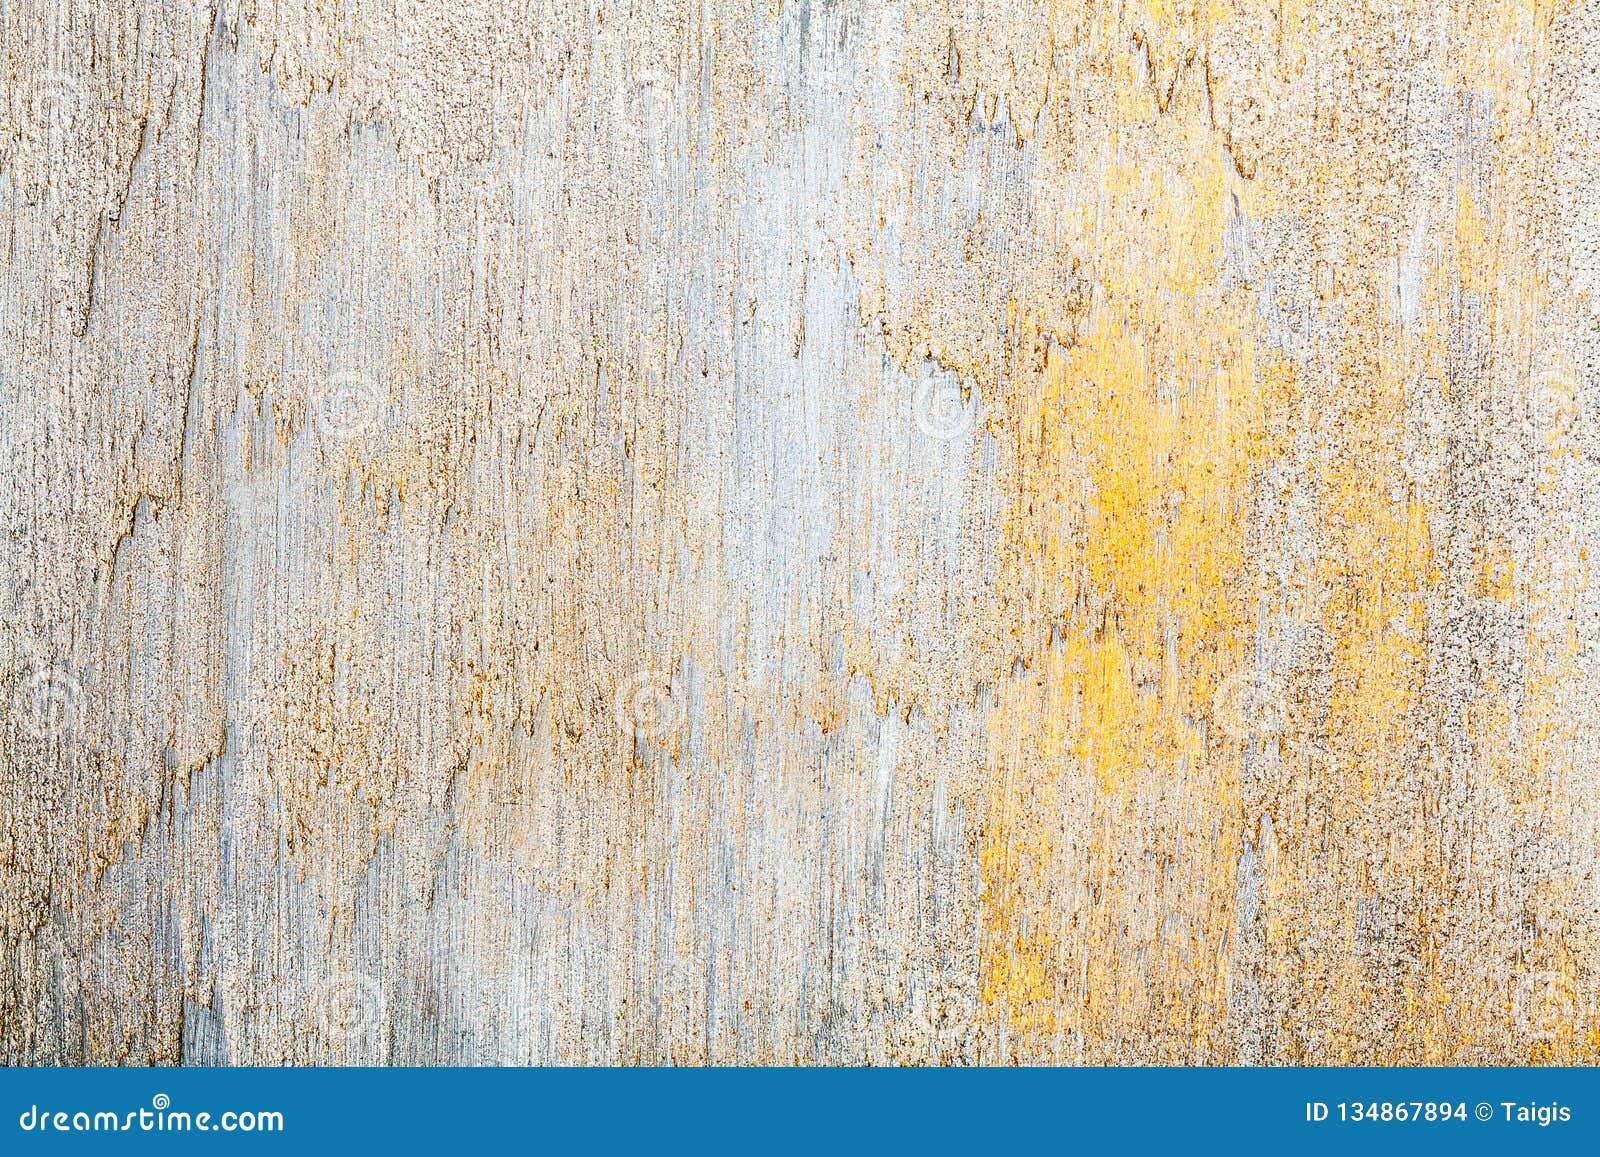 Wall Decor Texture Stock Photo Image Of Interior Paint